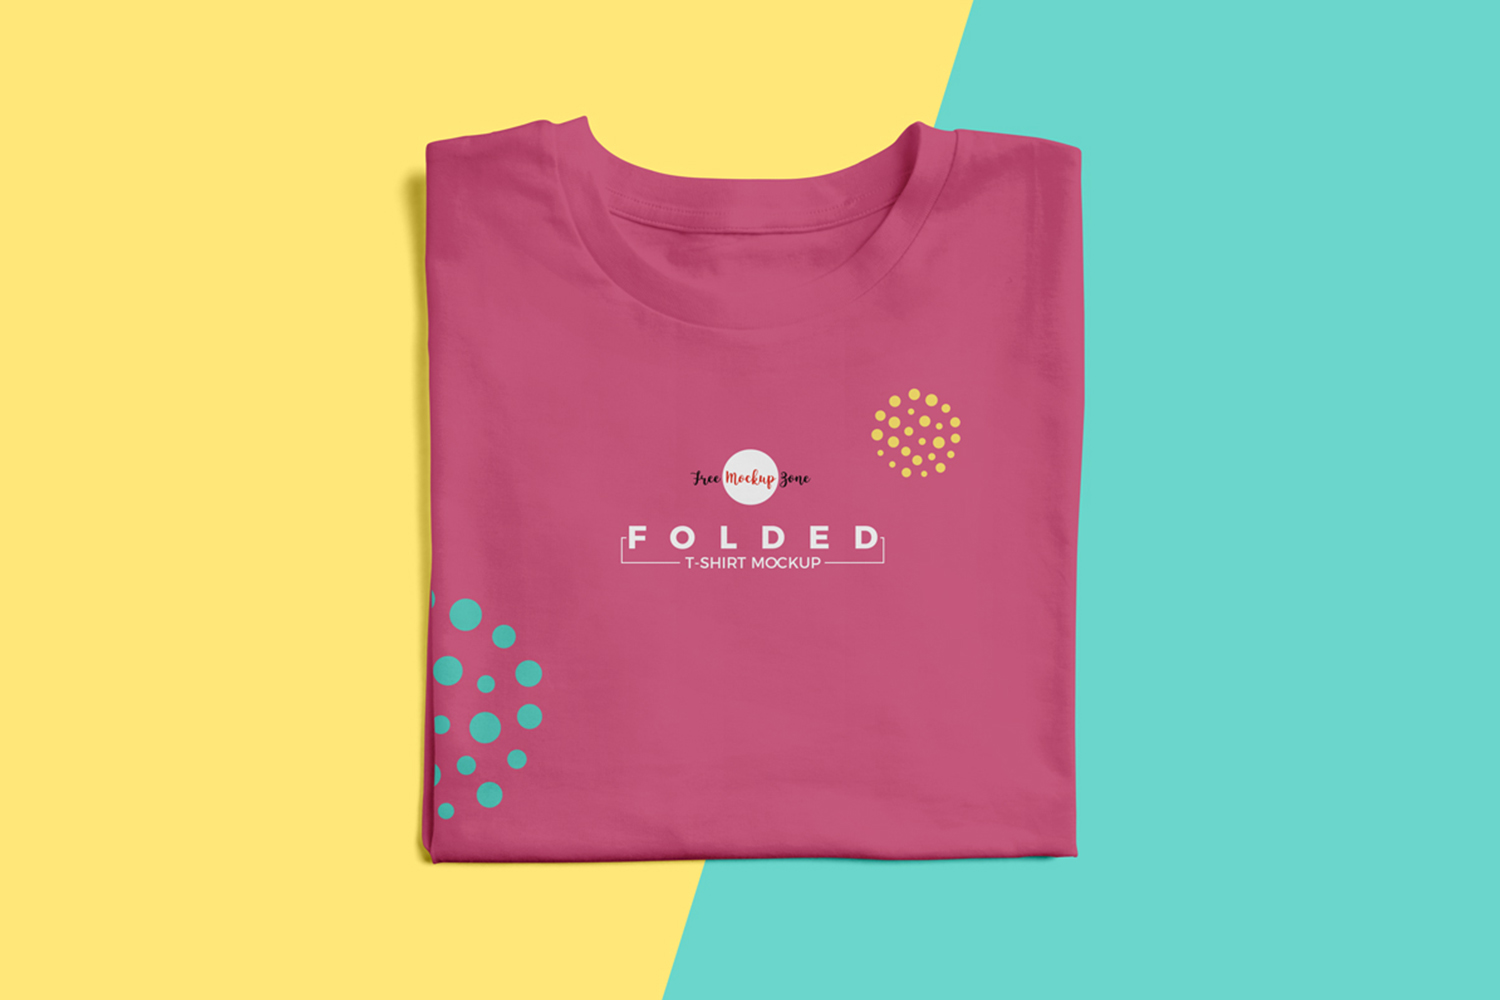 Brand Folded T-Shirt Mockup Free Download